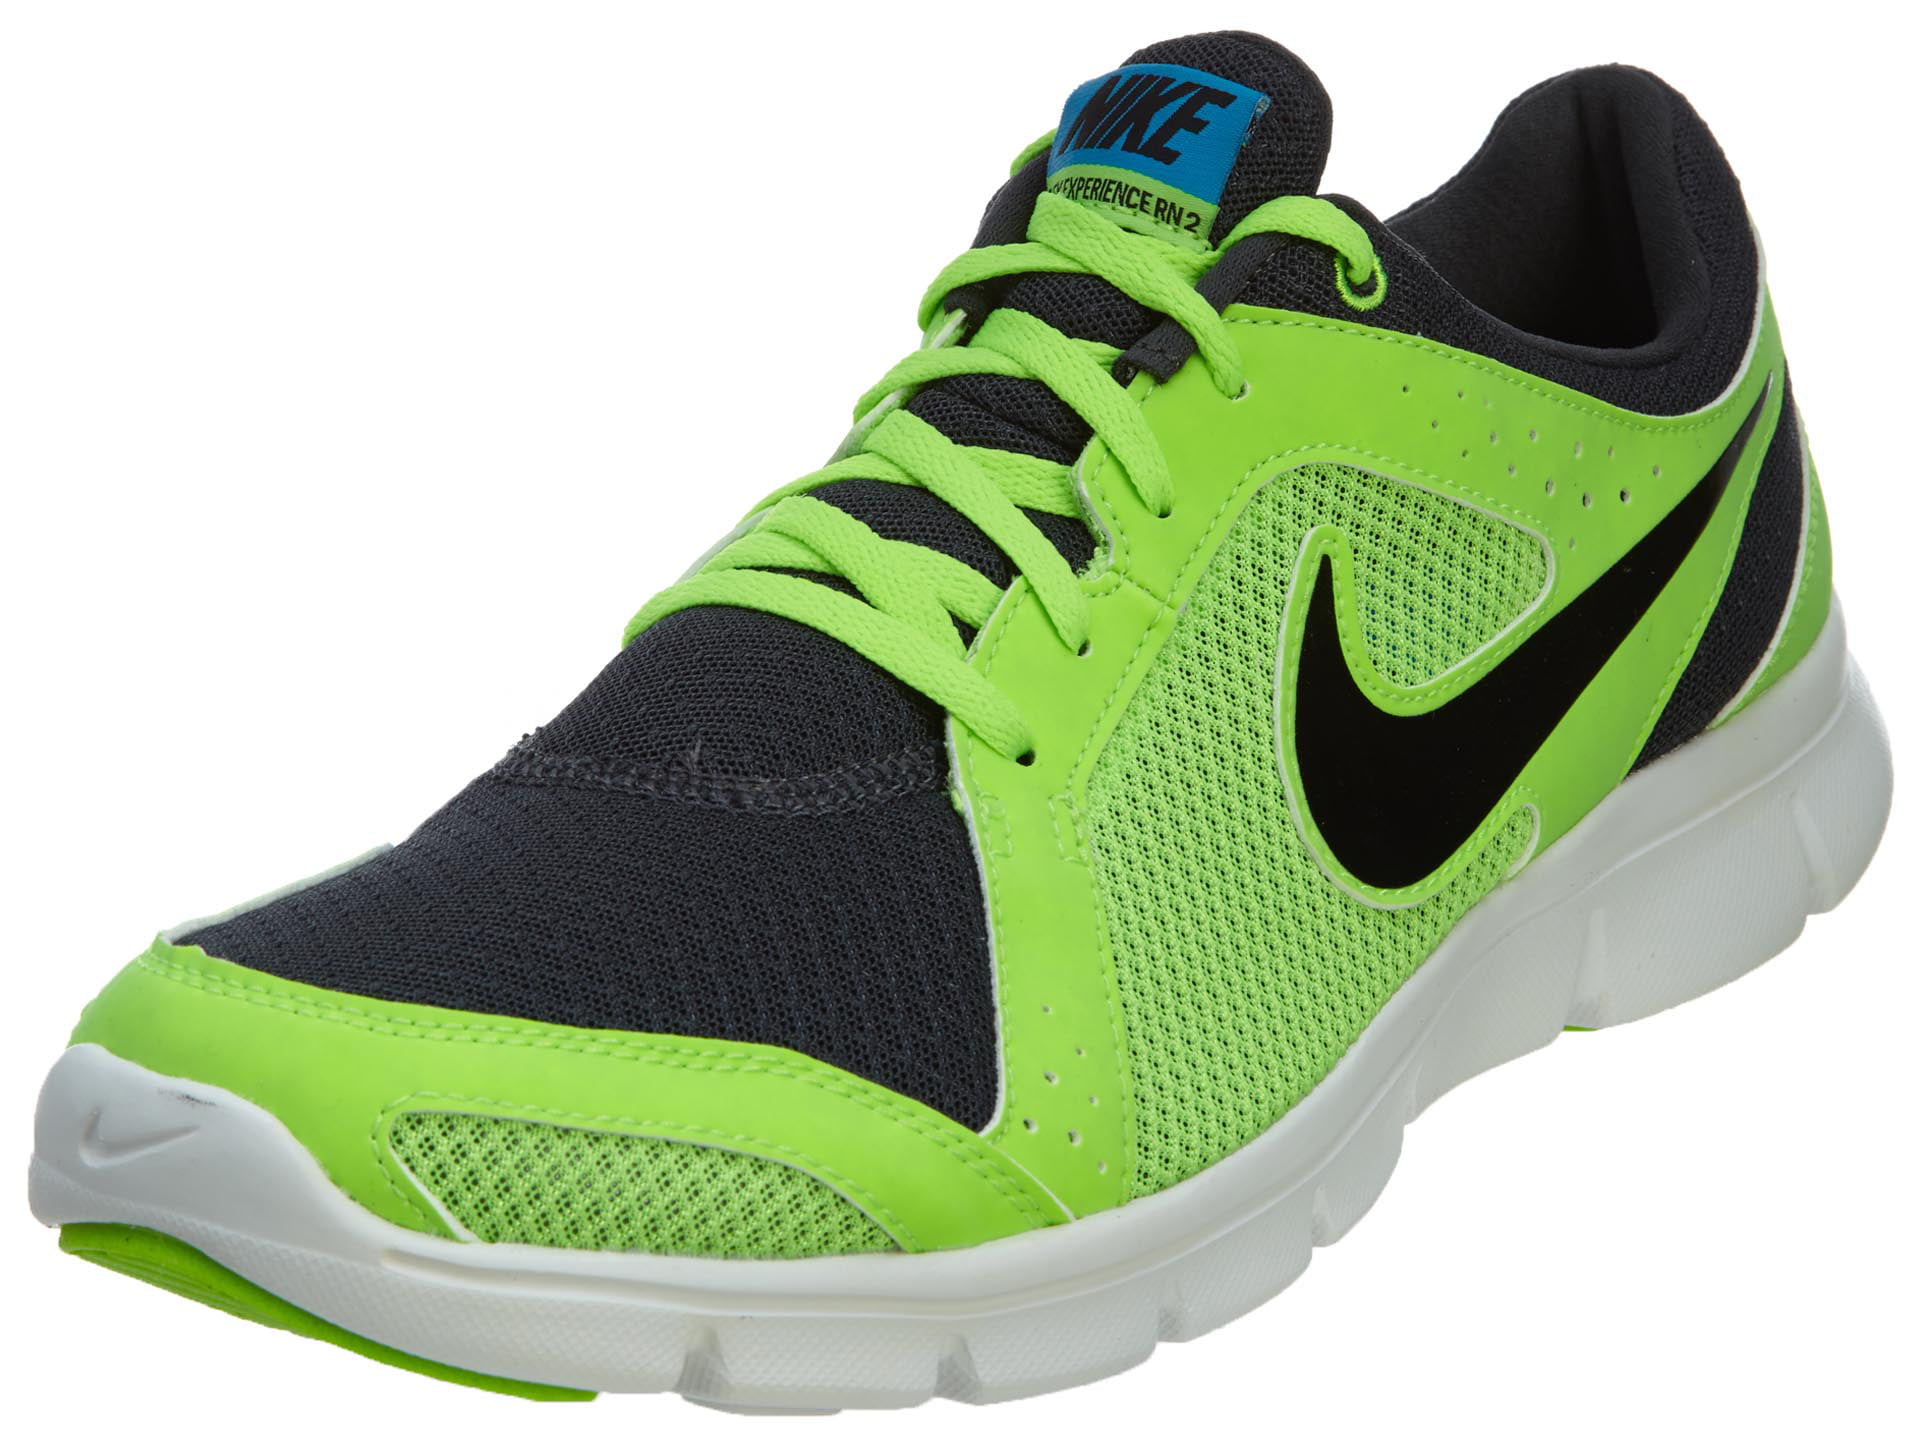 Nike - Nike Flex Experience Rn 2 Msl Mens Style : 599542 - Walmart.com ...